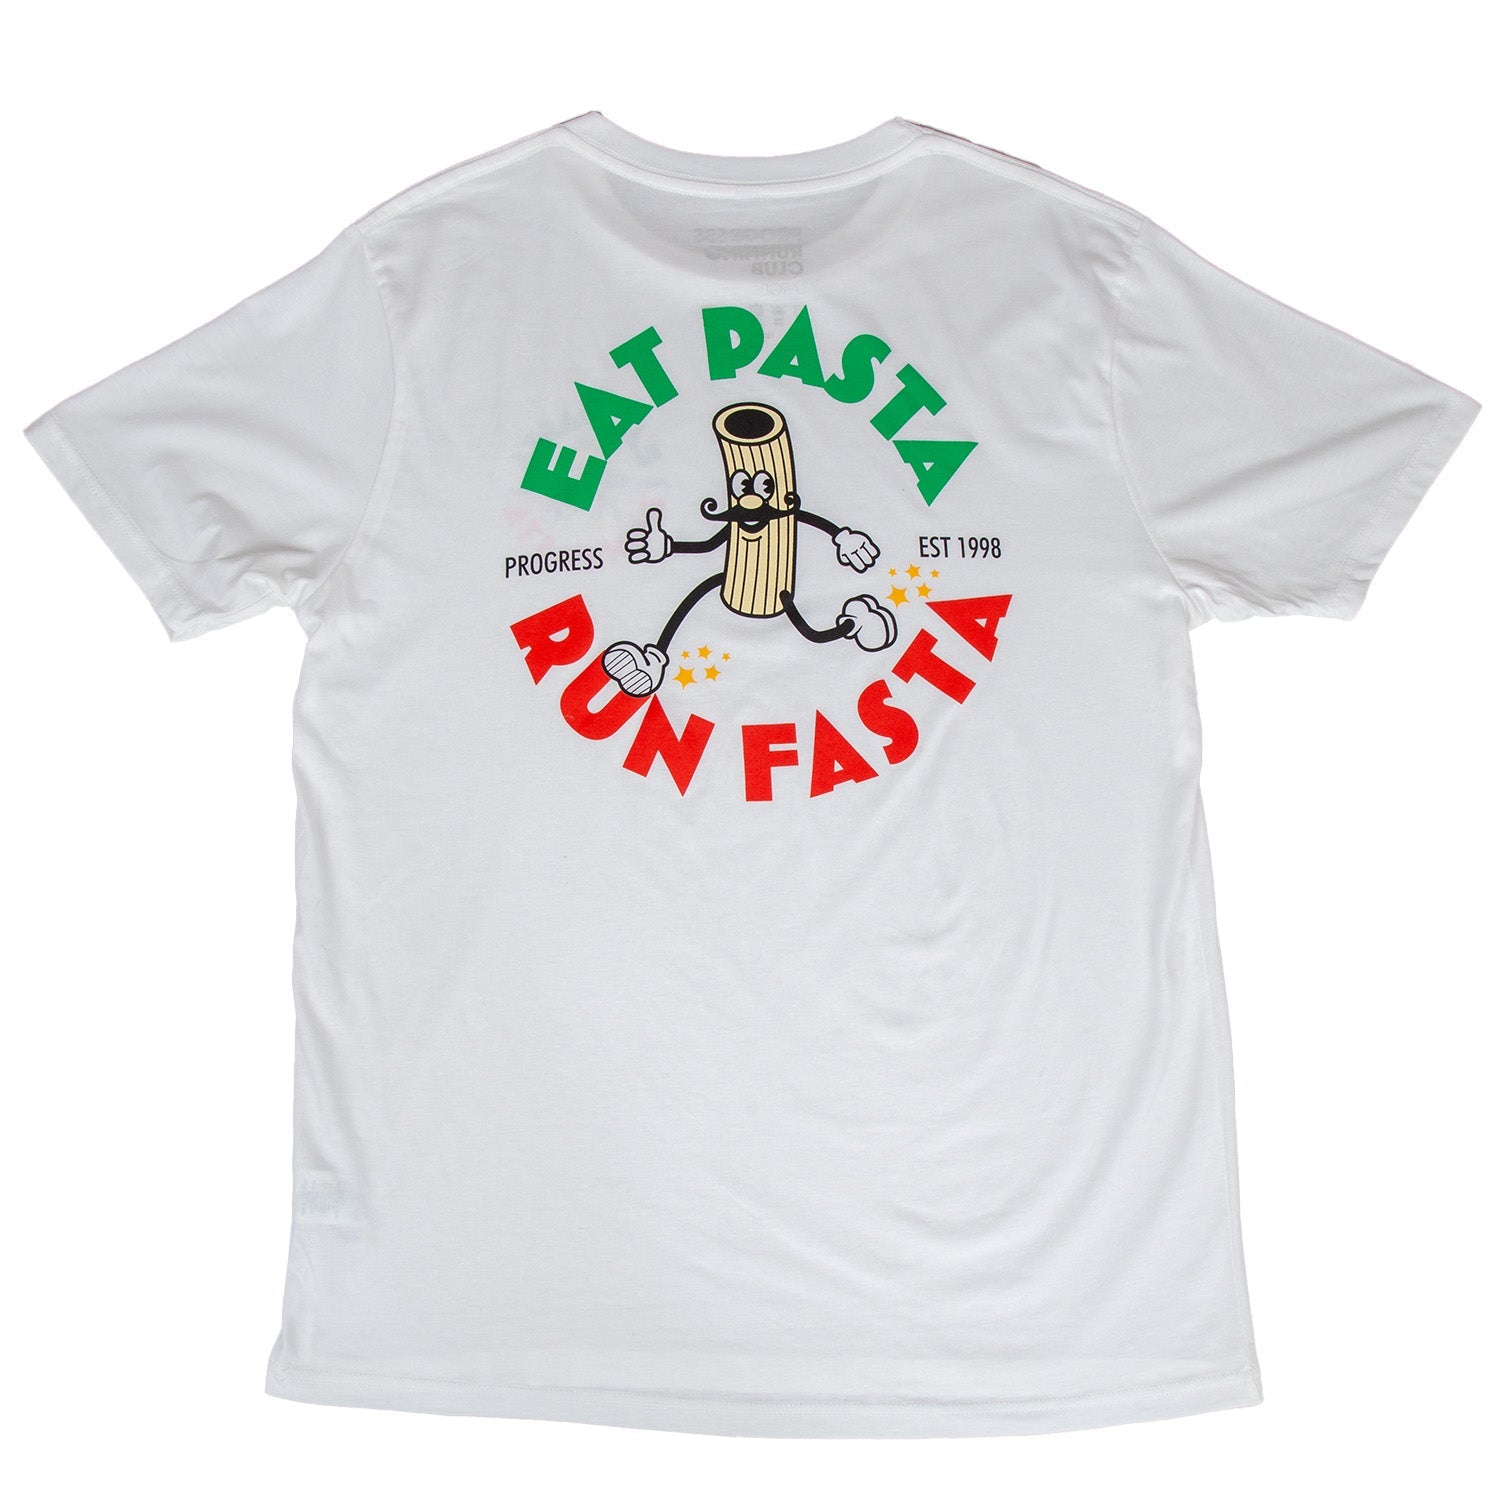 Progress Running Club Eat Pasta Classic Short Sleeve T-Shirt in White